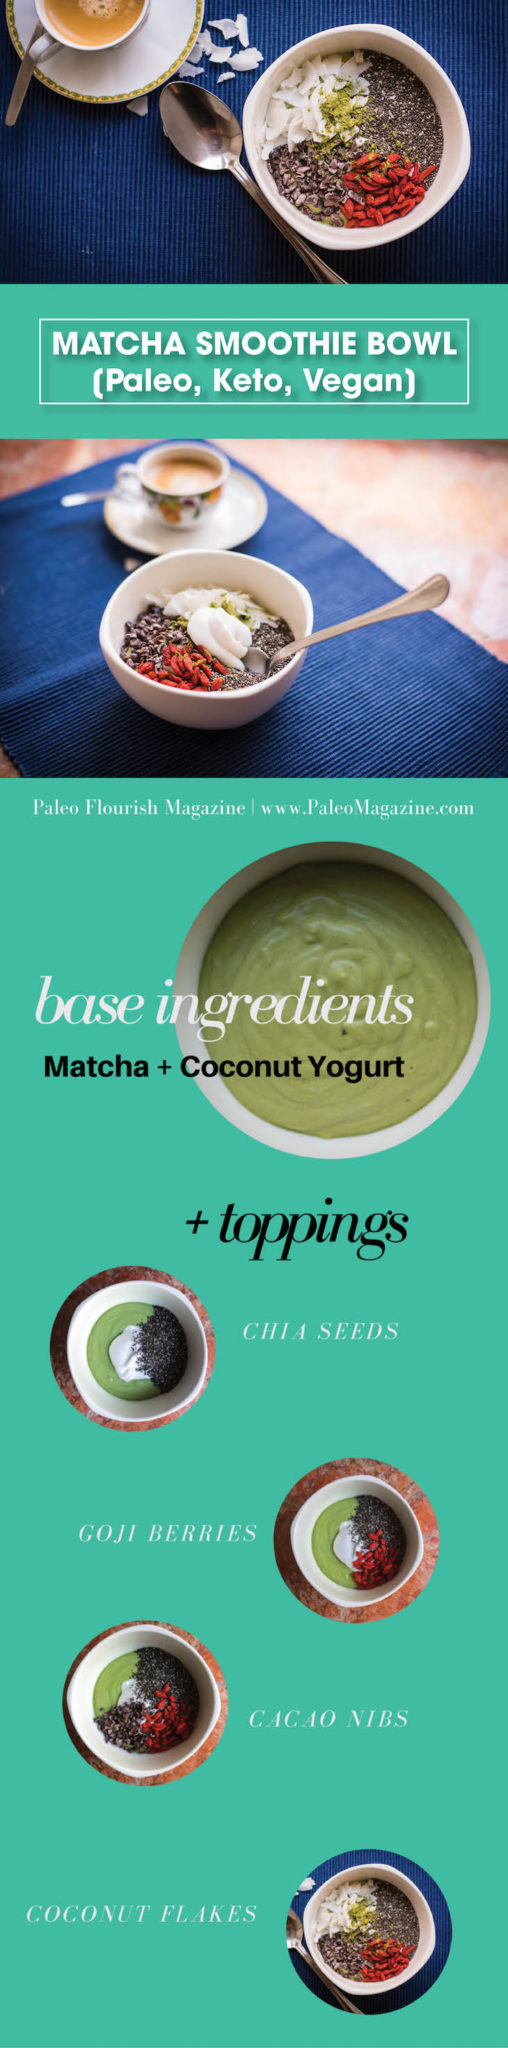 How To Make Matcha Ketogenic Smoothie Bowl Recipe Infographic #infographic #paleo #keto #recipe https://ketosummit.com/matcha-ketogenic-smoothie-bowl-recipe-paleo-keto-dairy-free